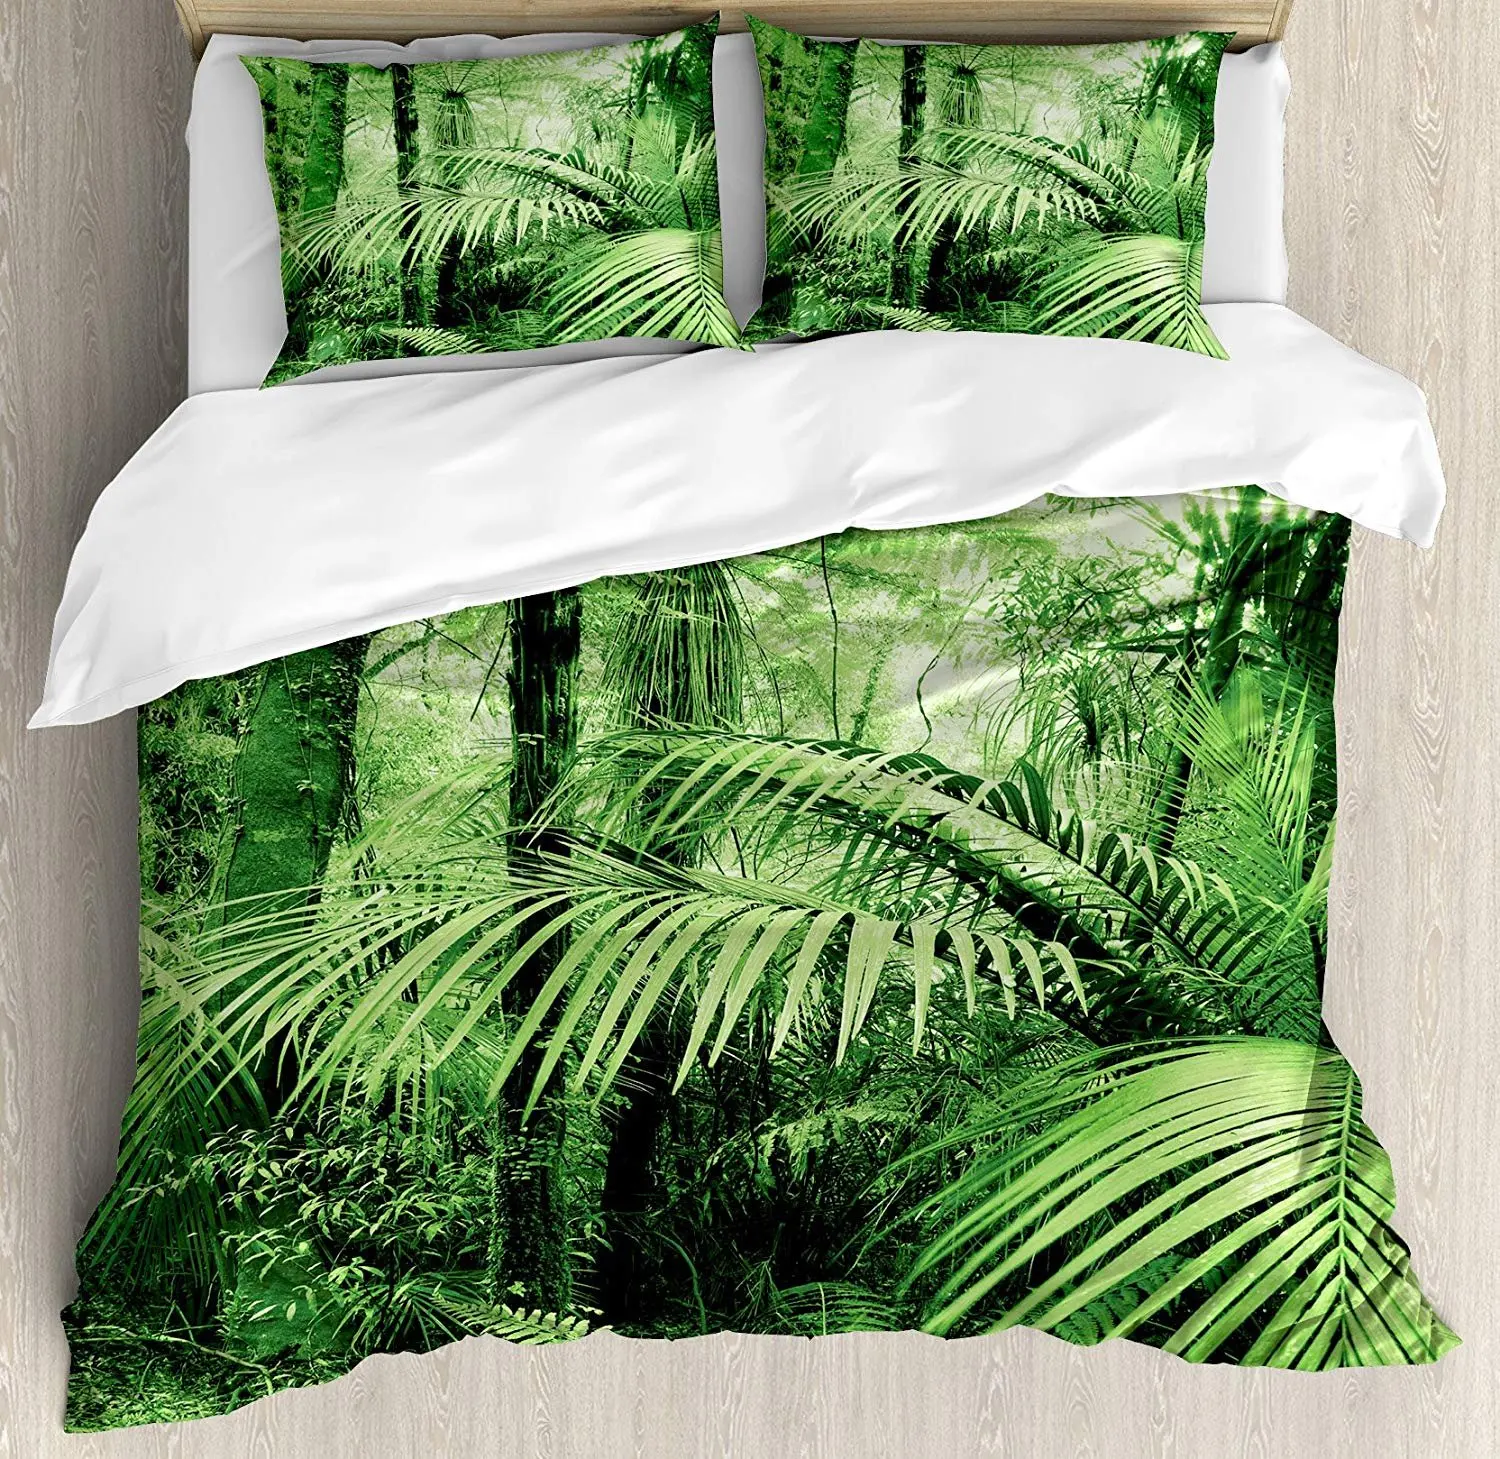 

Rainforest Bedding Set Palm Trees and Exotic Plants in Tropical Jungle Wild Nature Zen Illustration Duvet Cover Pillowcase